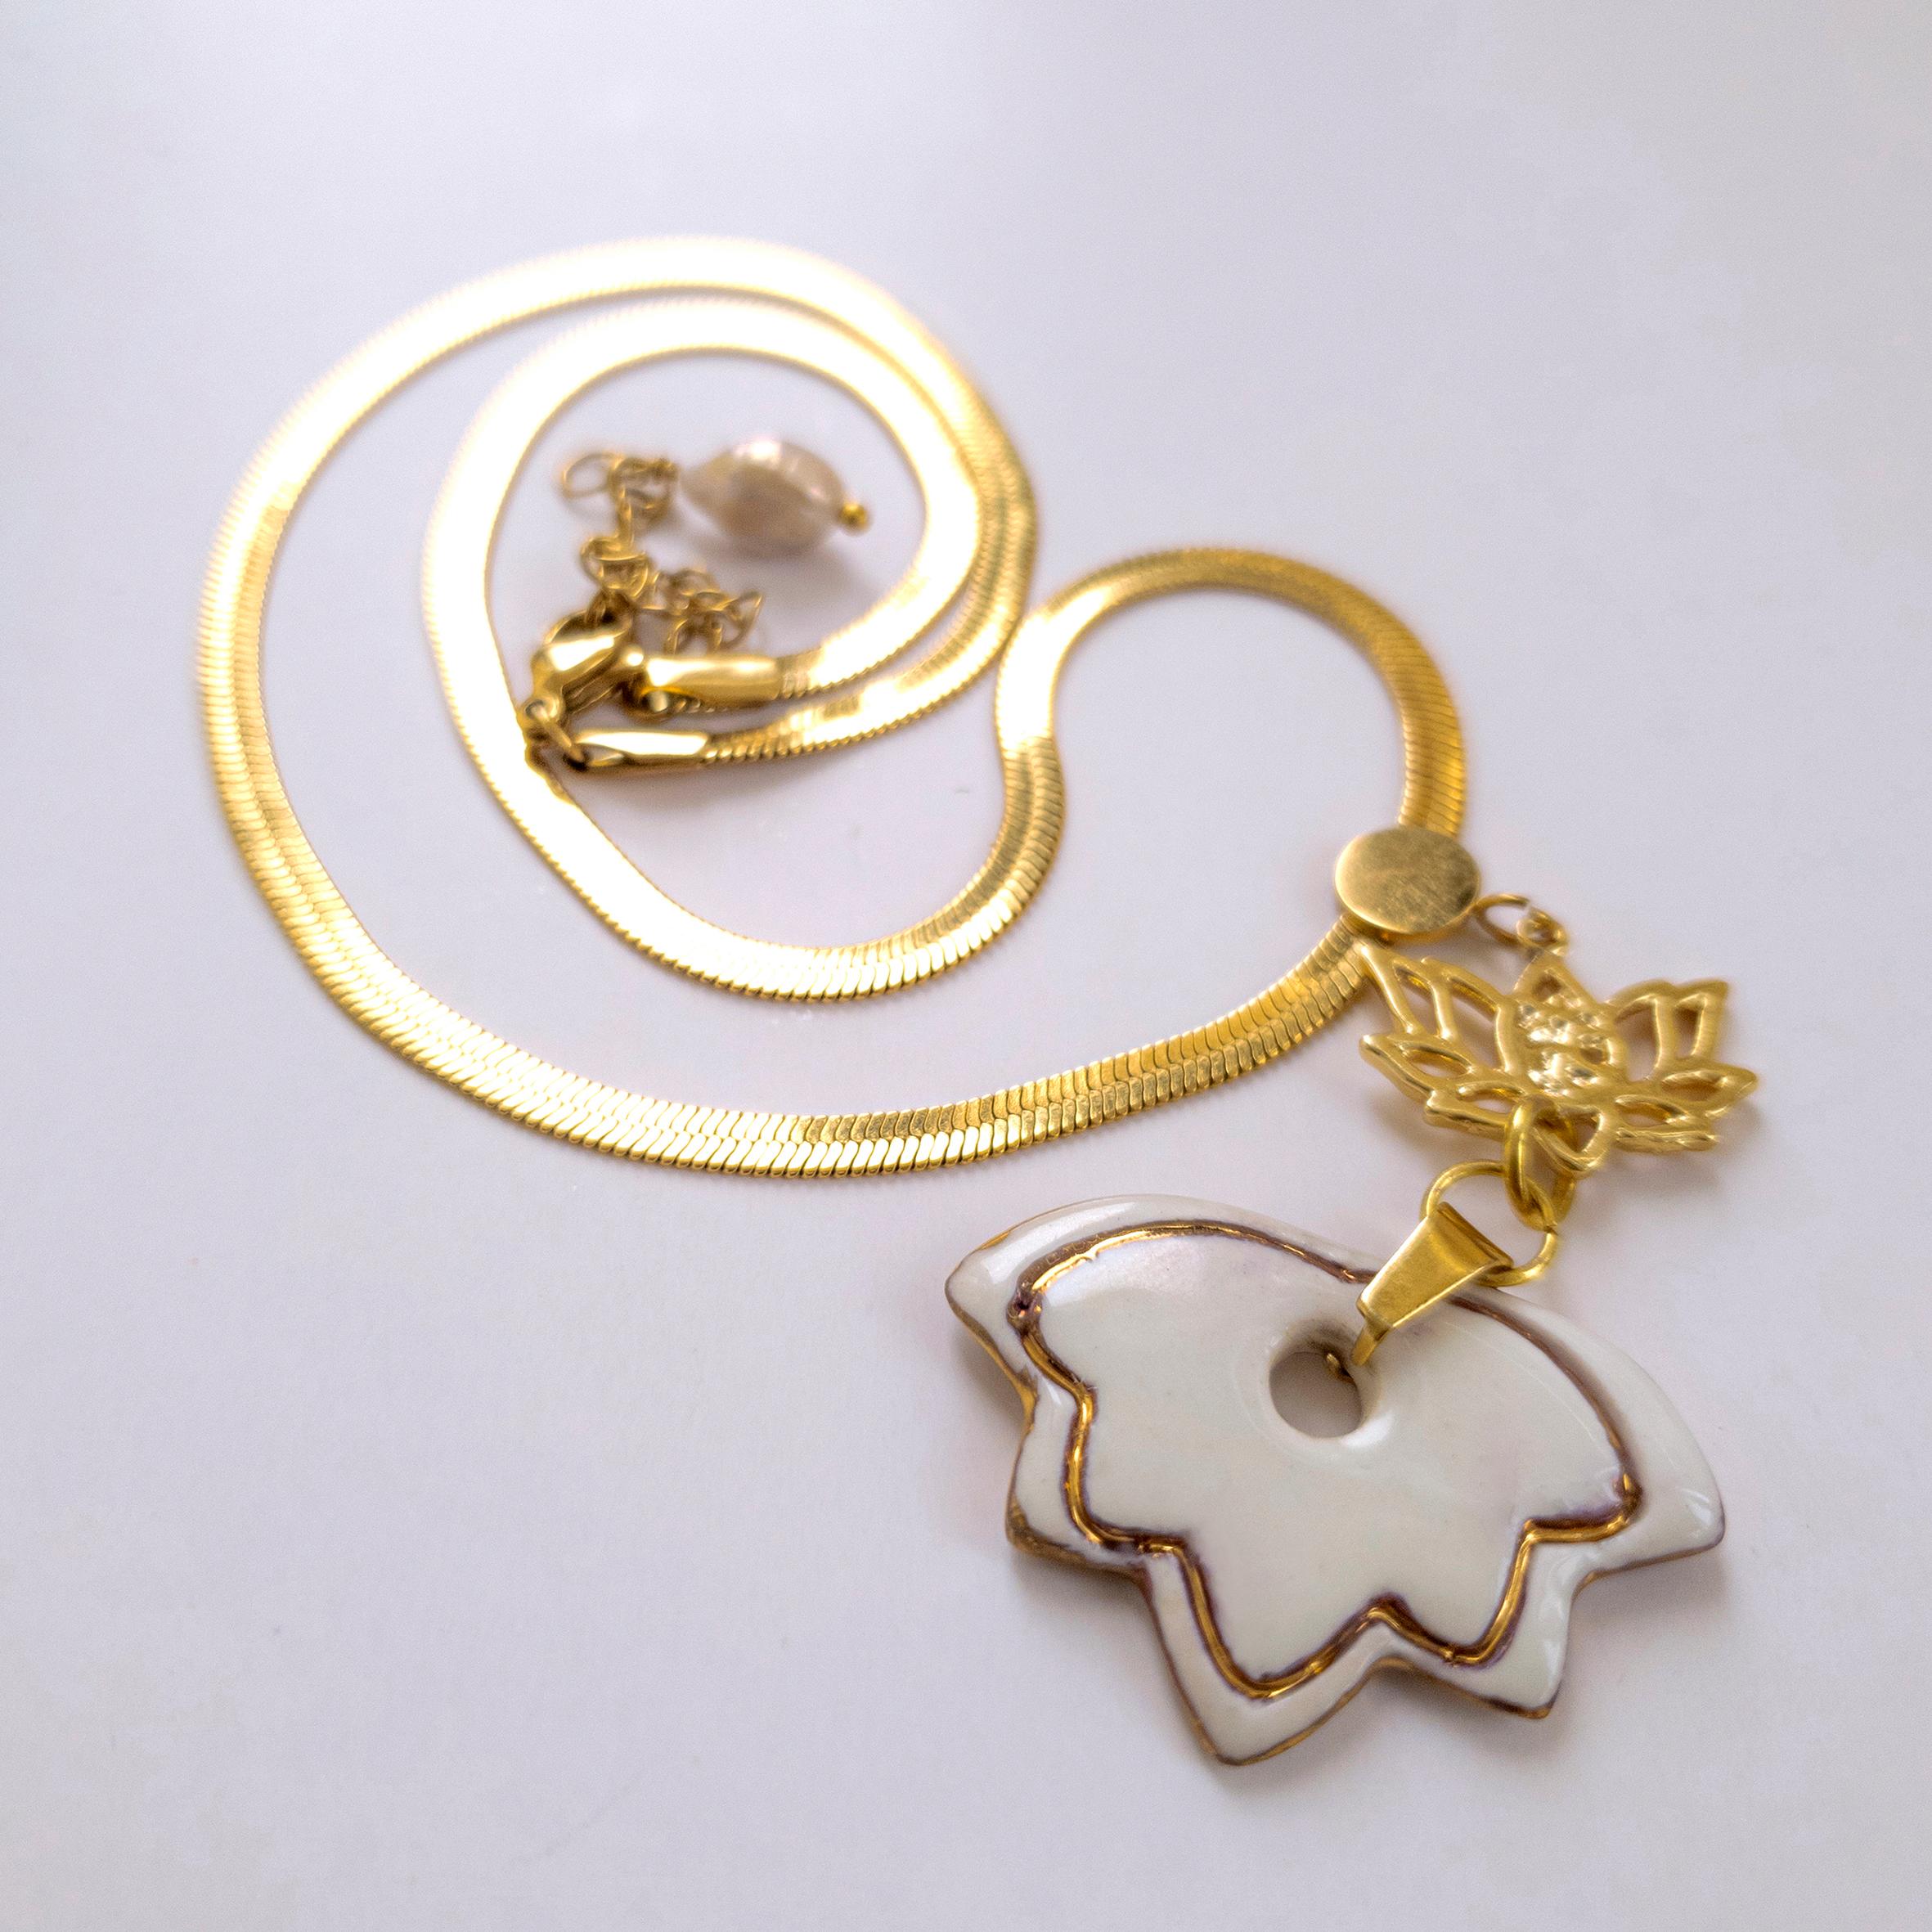 Spr06 White Lotus Pendant Collar Necklace